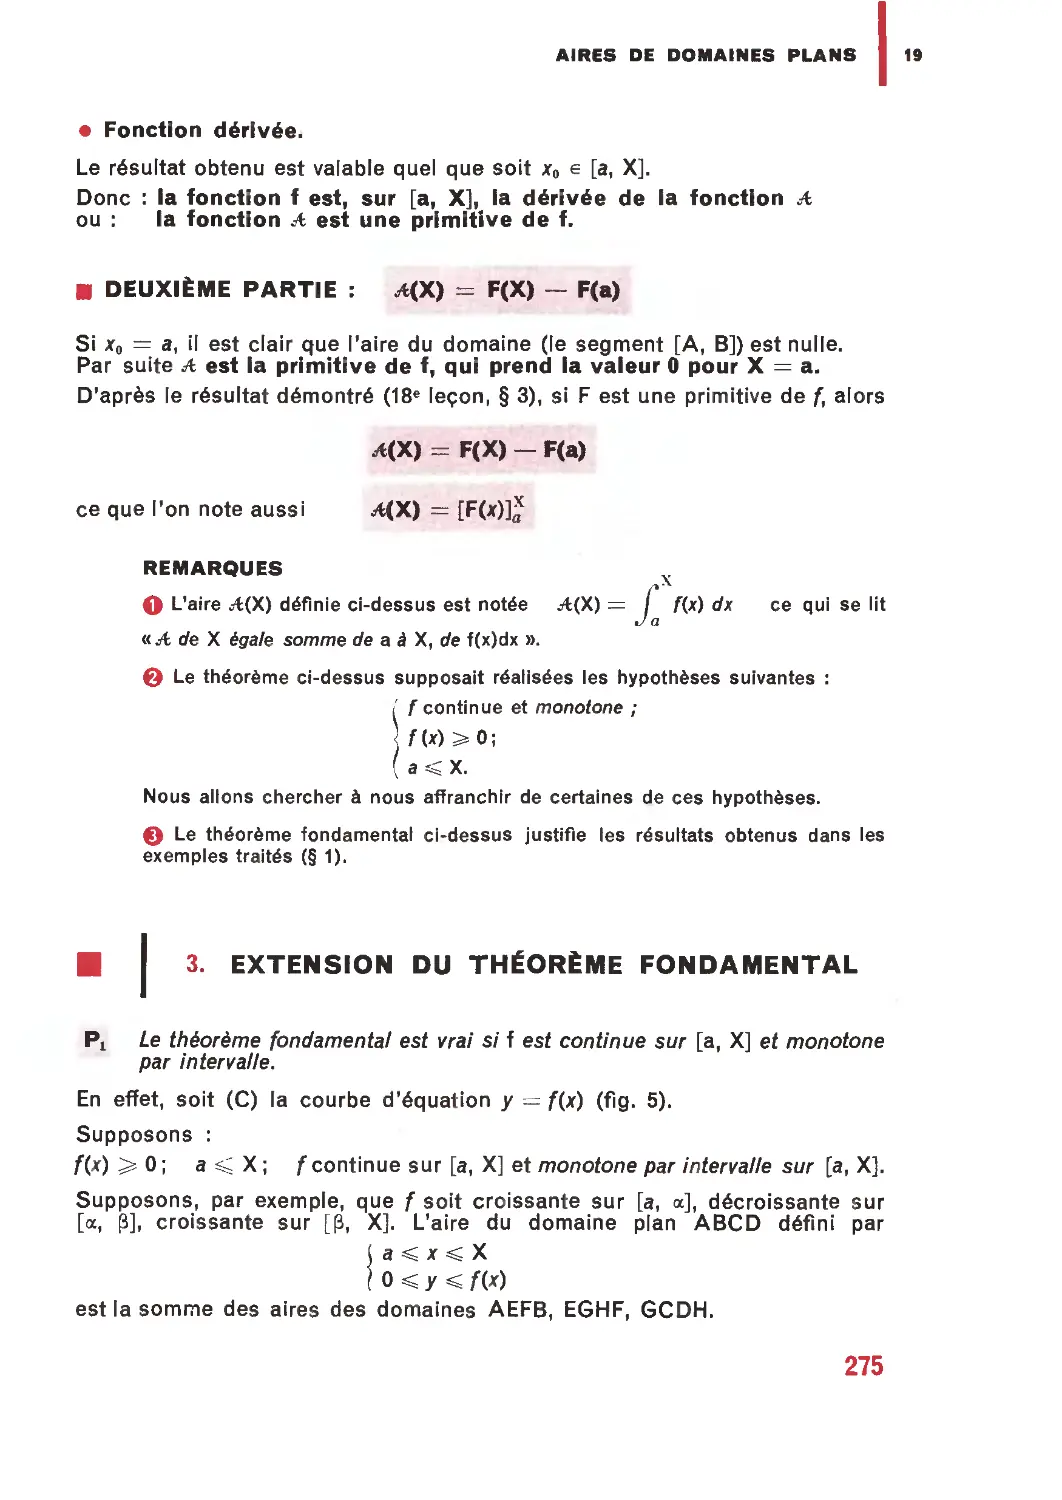 3. Extension du théorème fondamental